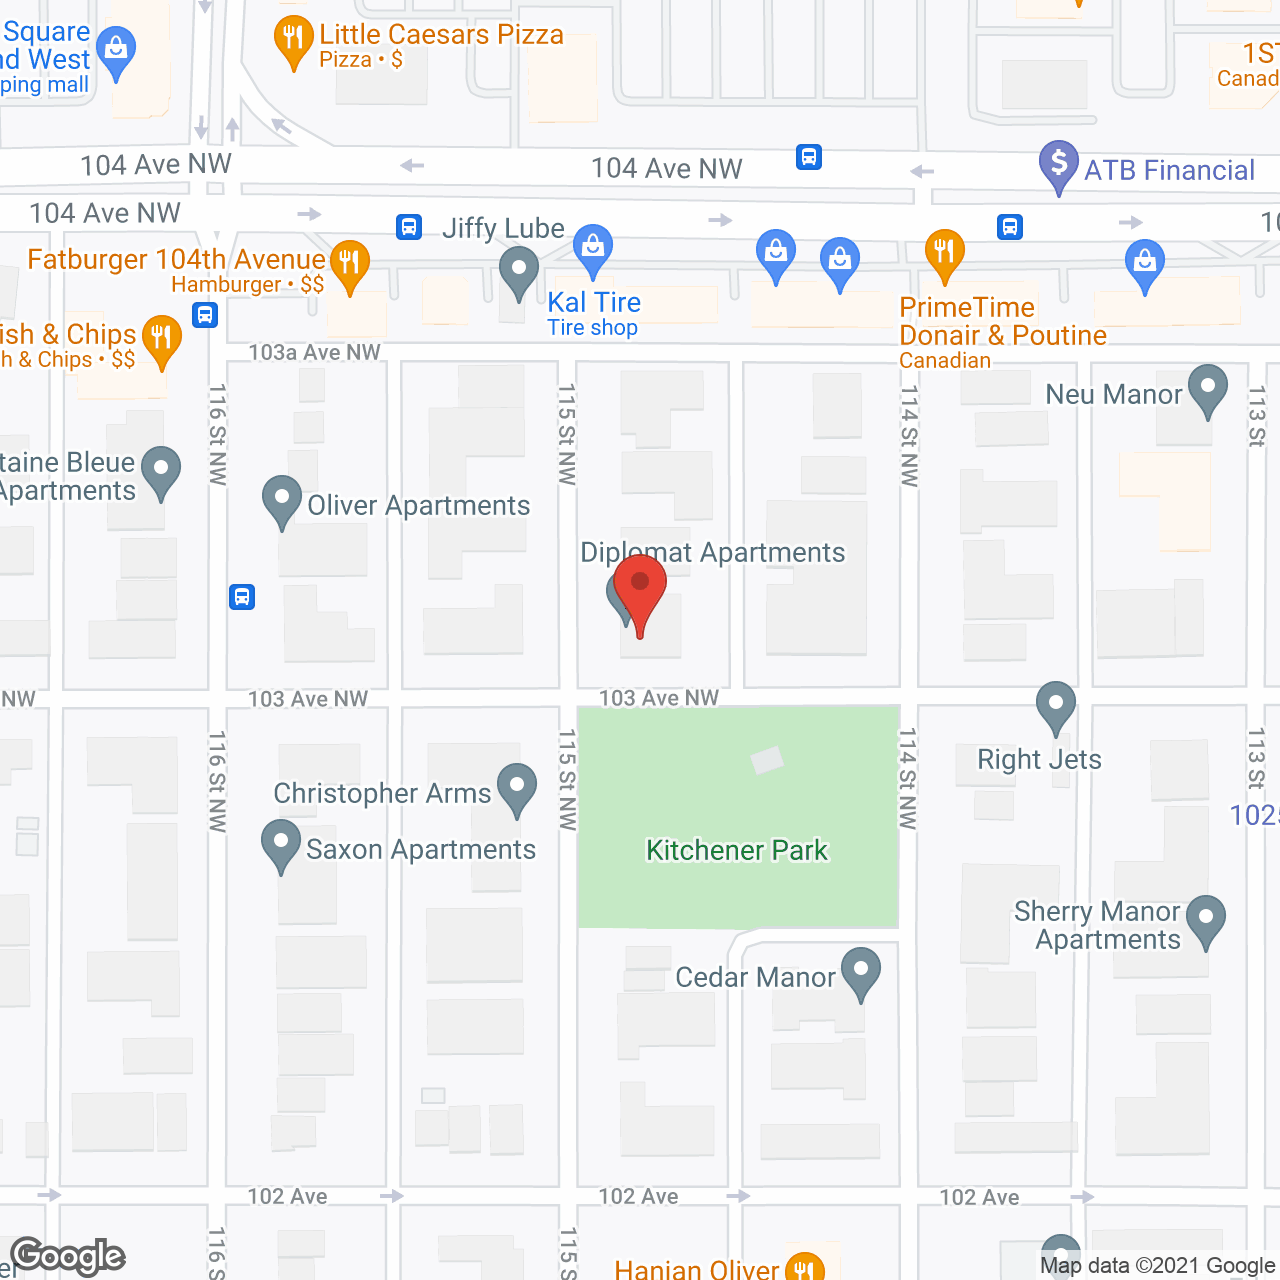 Diplomat Apartments in google map